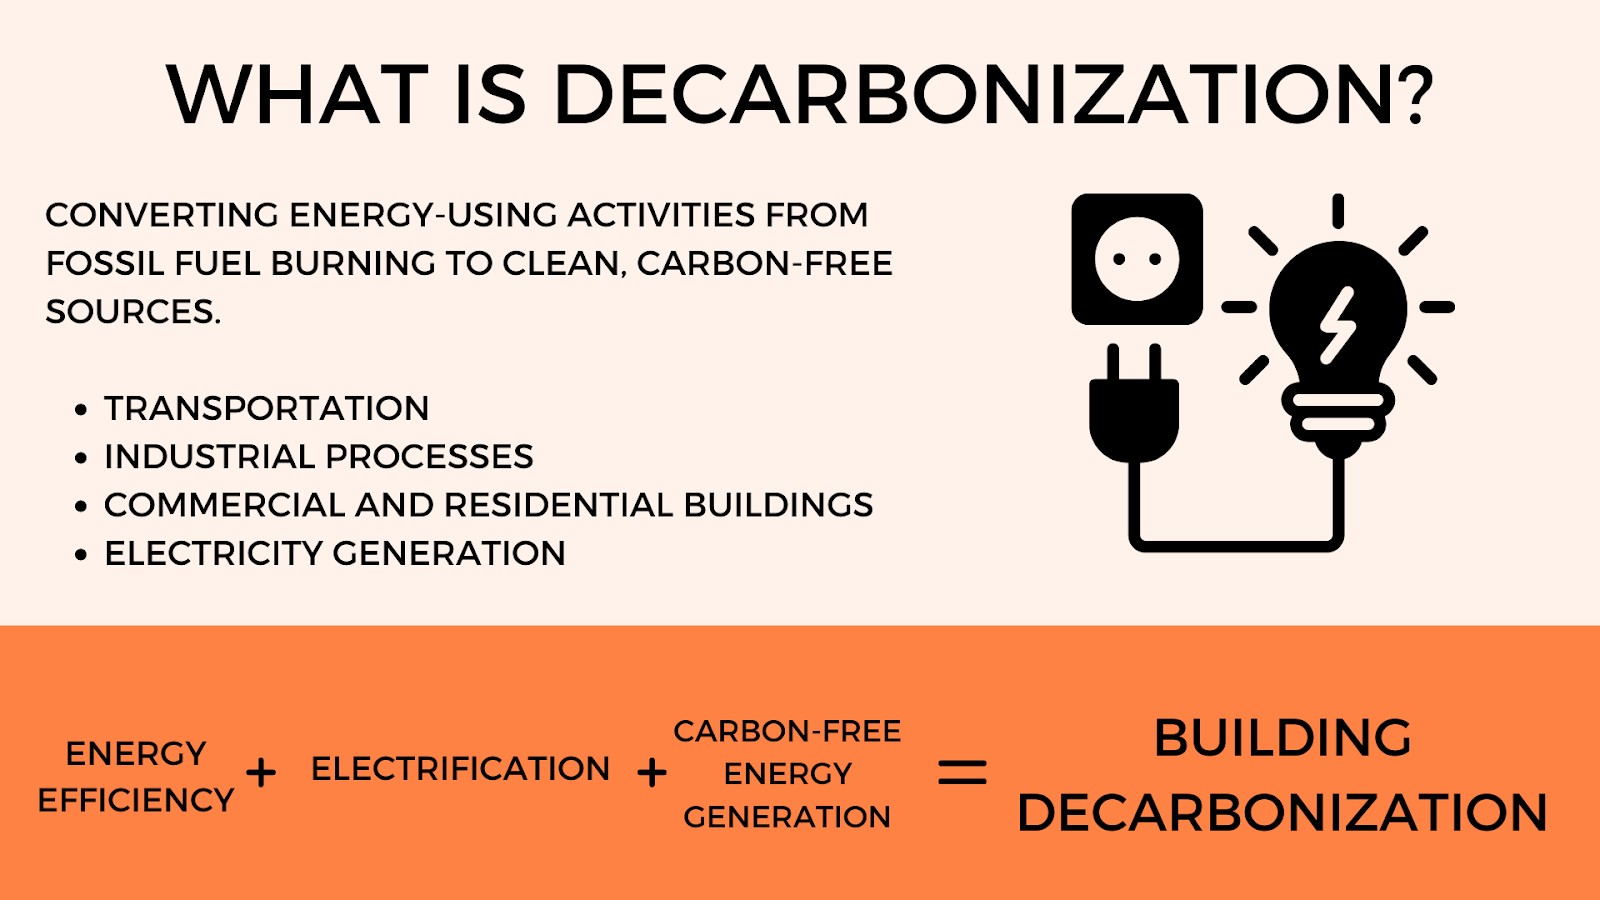 Diagram showing energy efficiency + electrification + carbon-free energy = building decarbonization